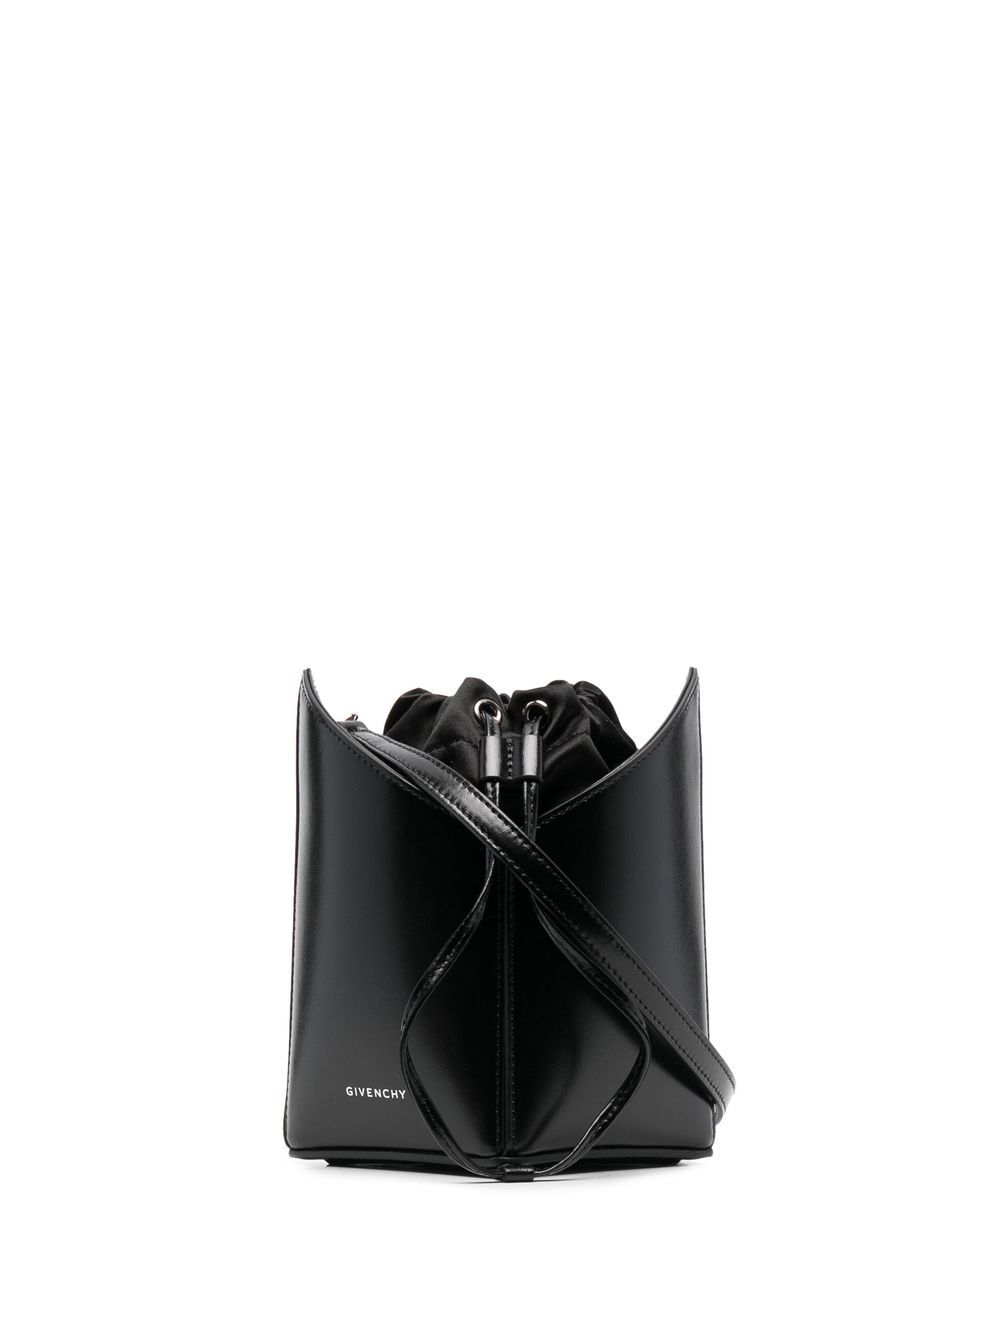 Givenchy Handbags - Women's Designer Bags - Farfetch